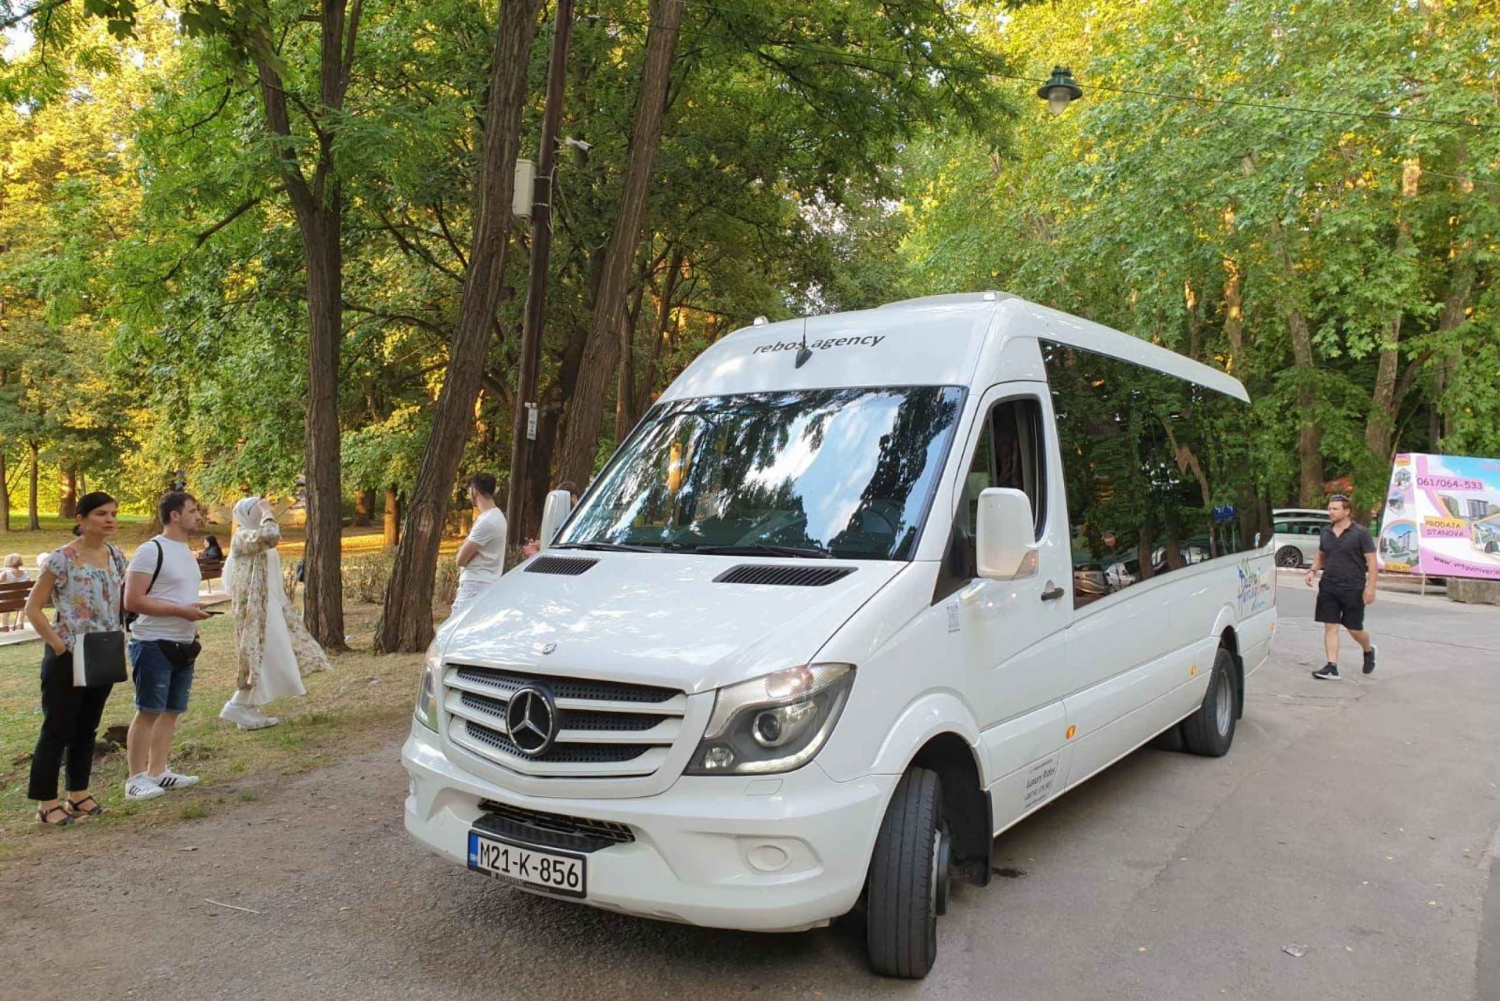 Flughafentransfers & private Touren mit Luxus-Minibus Bosnien